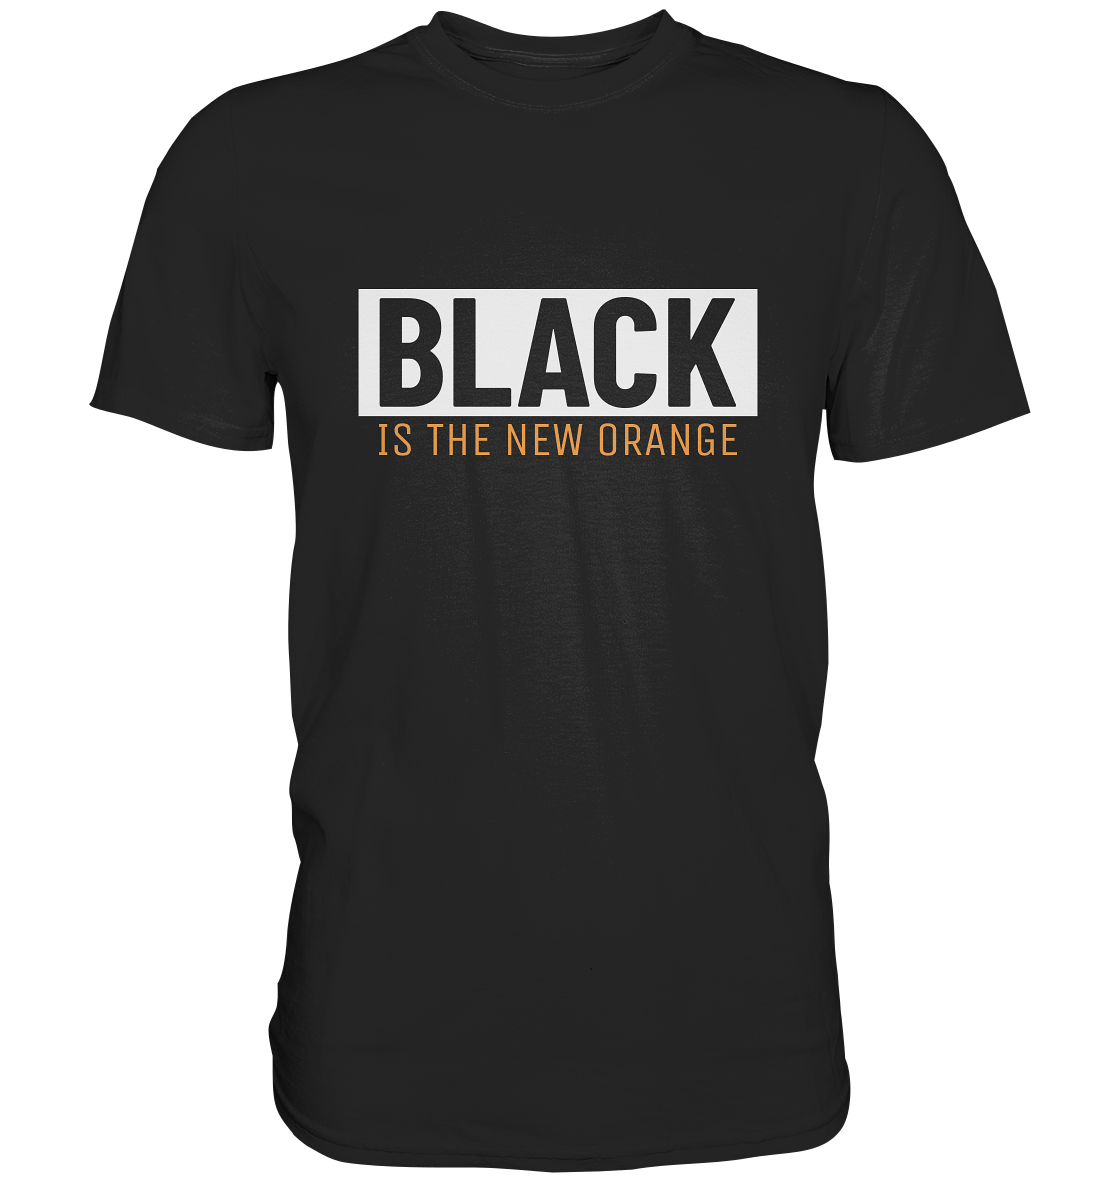 Black is the new orange - Premium Shirt